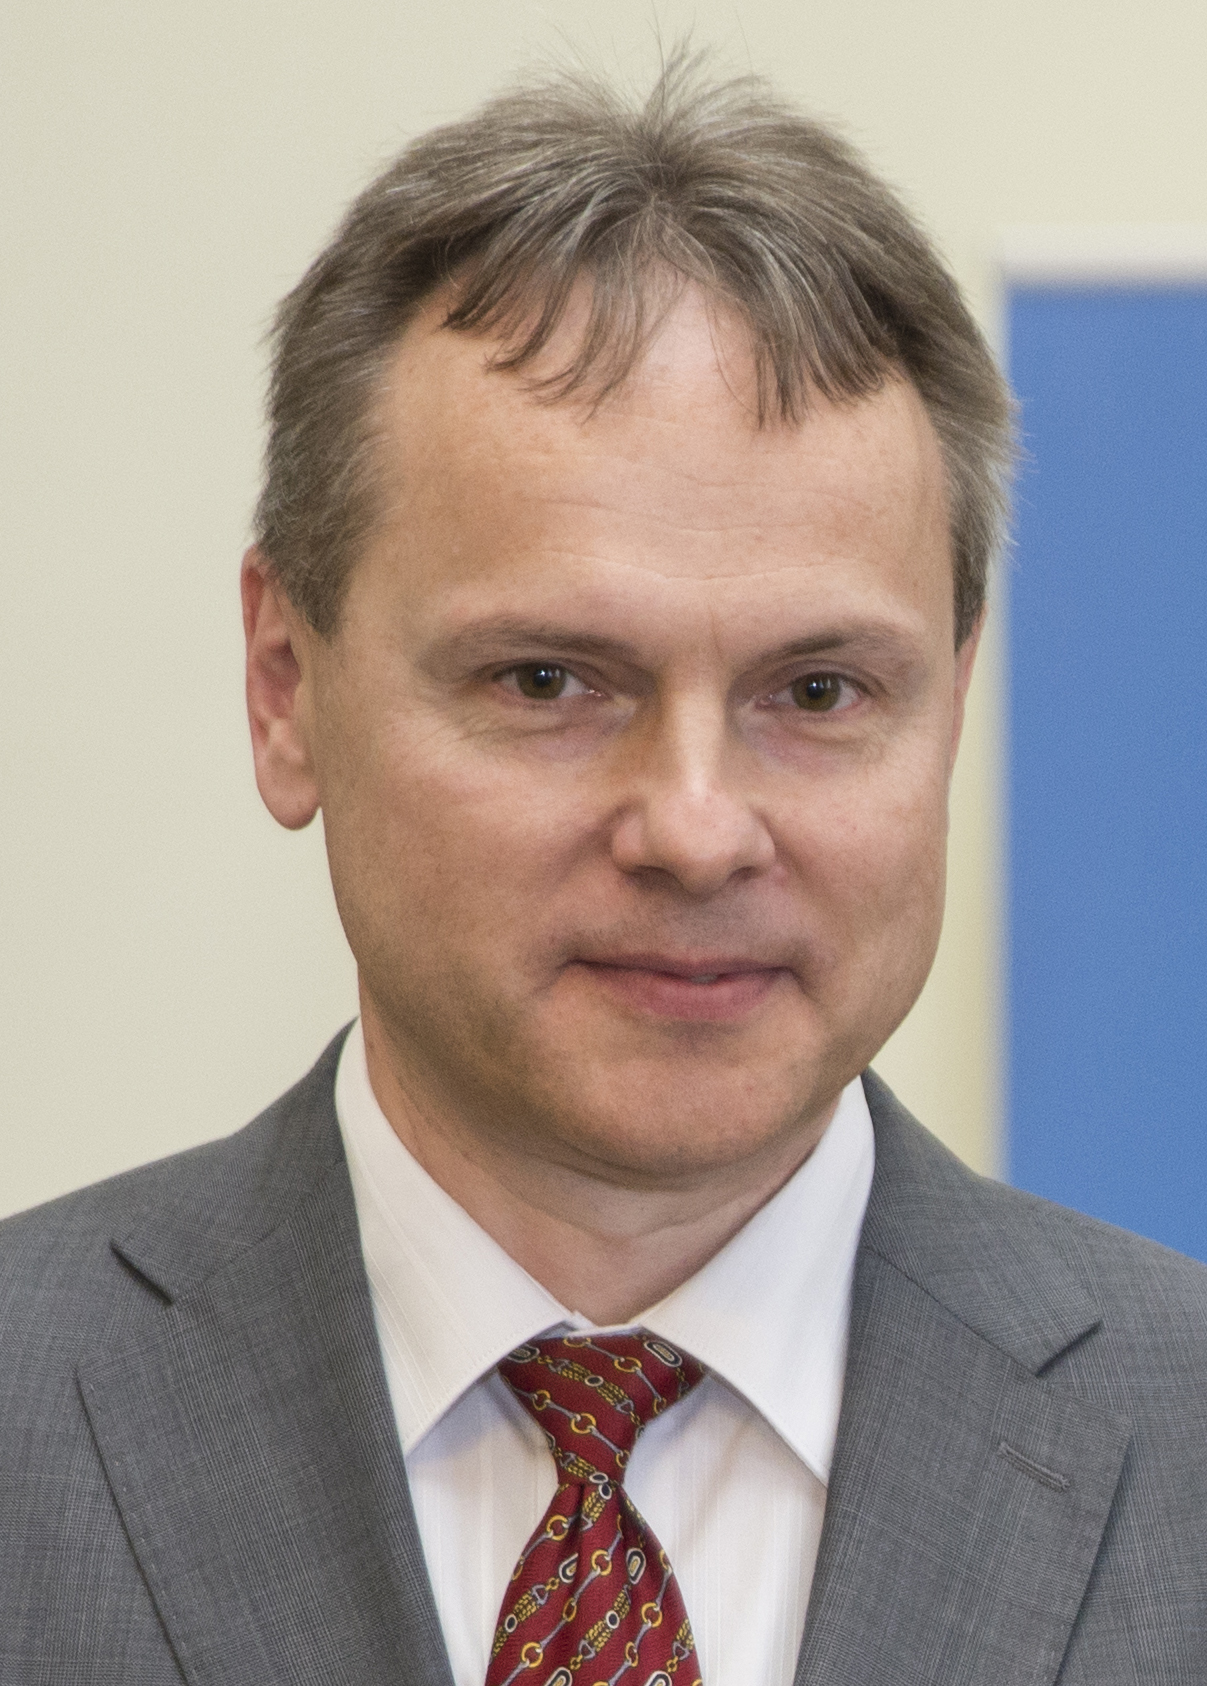 Michal Hocek